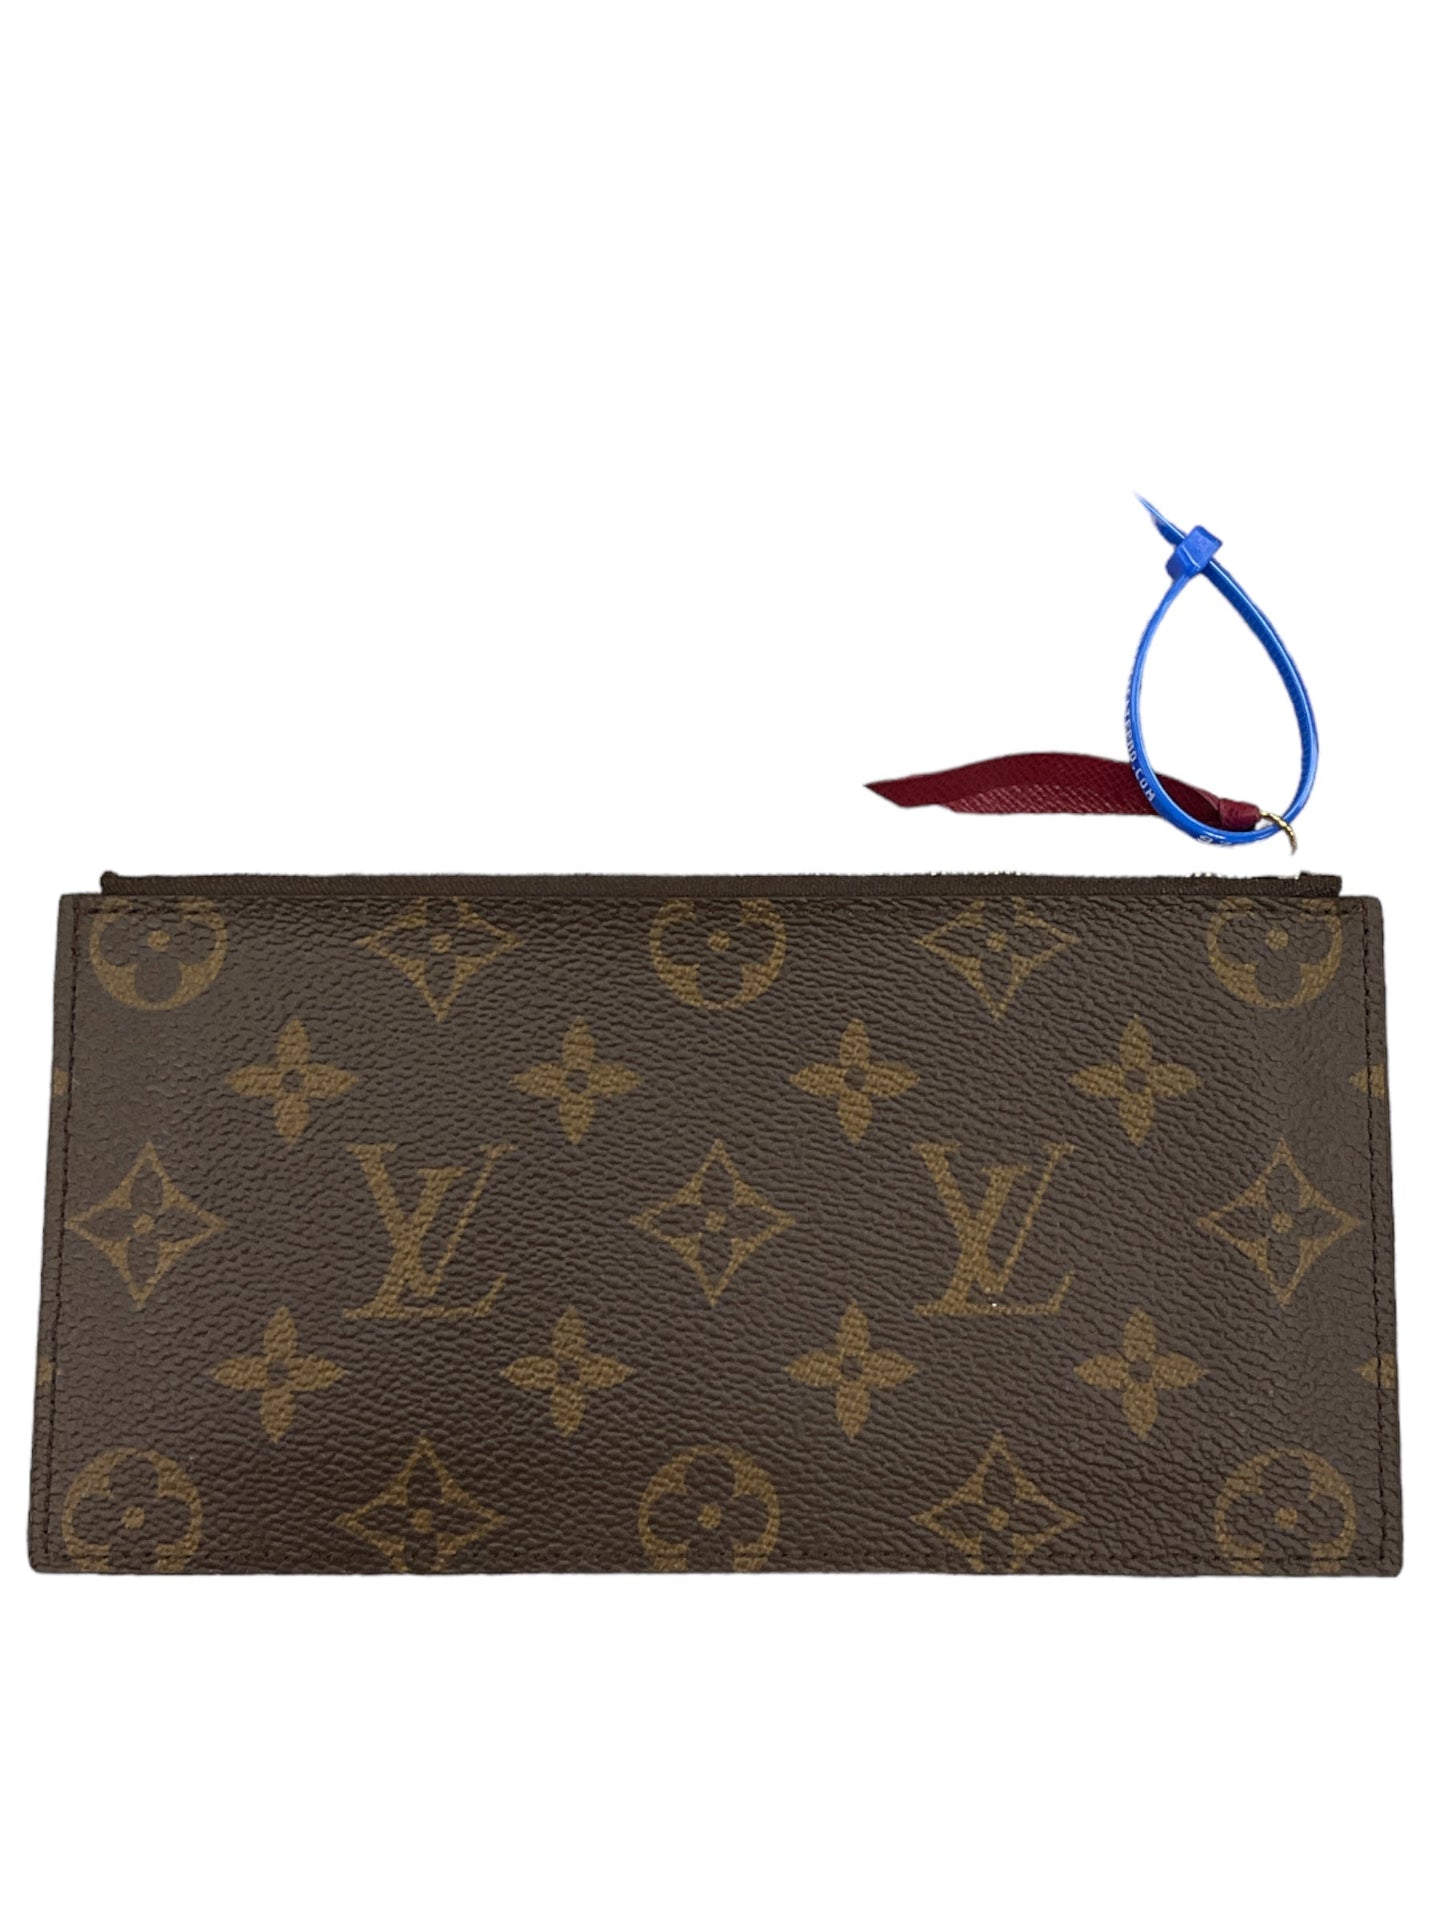 Accessory Luxury Designer Label By Louis Vuitton  Size: 03 Piece